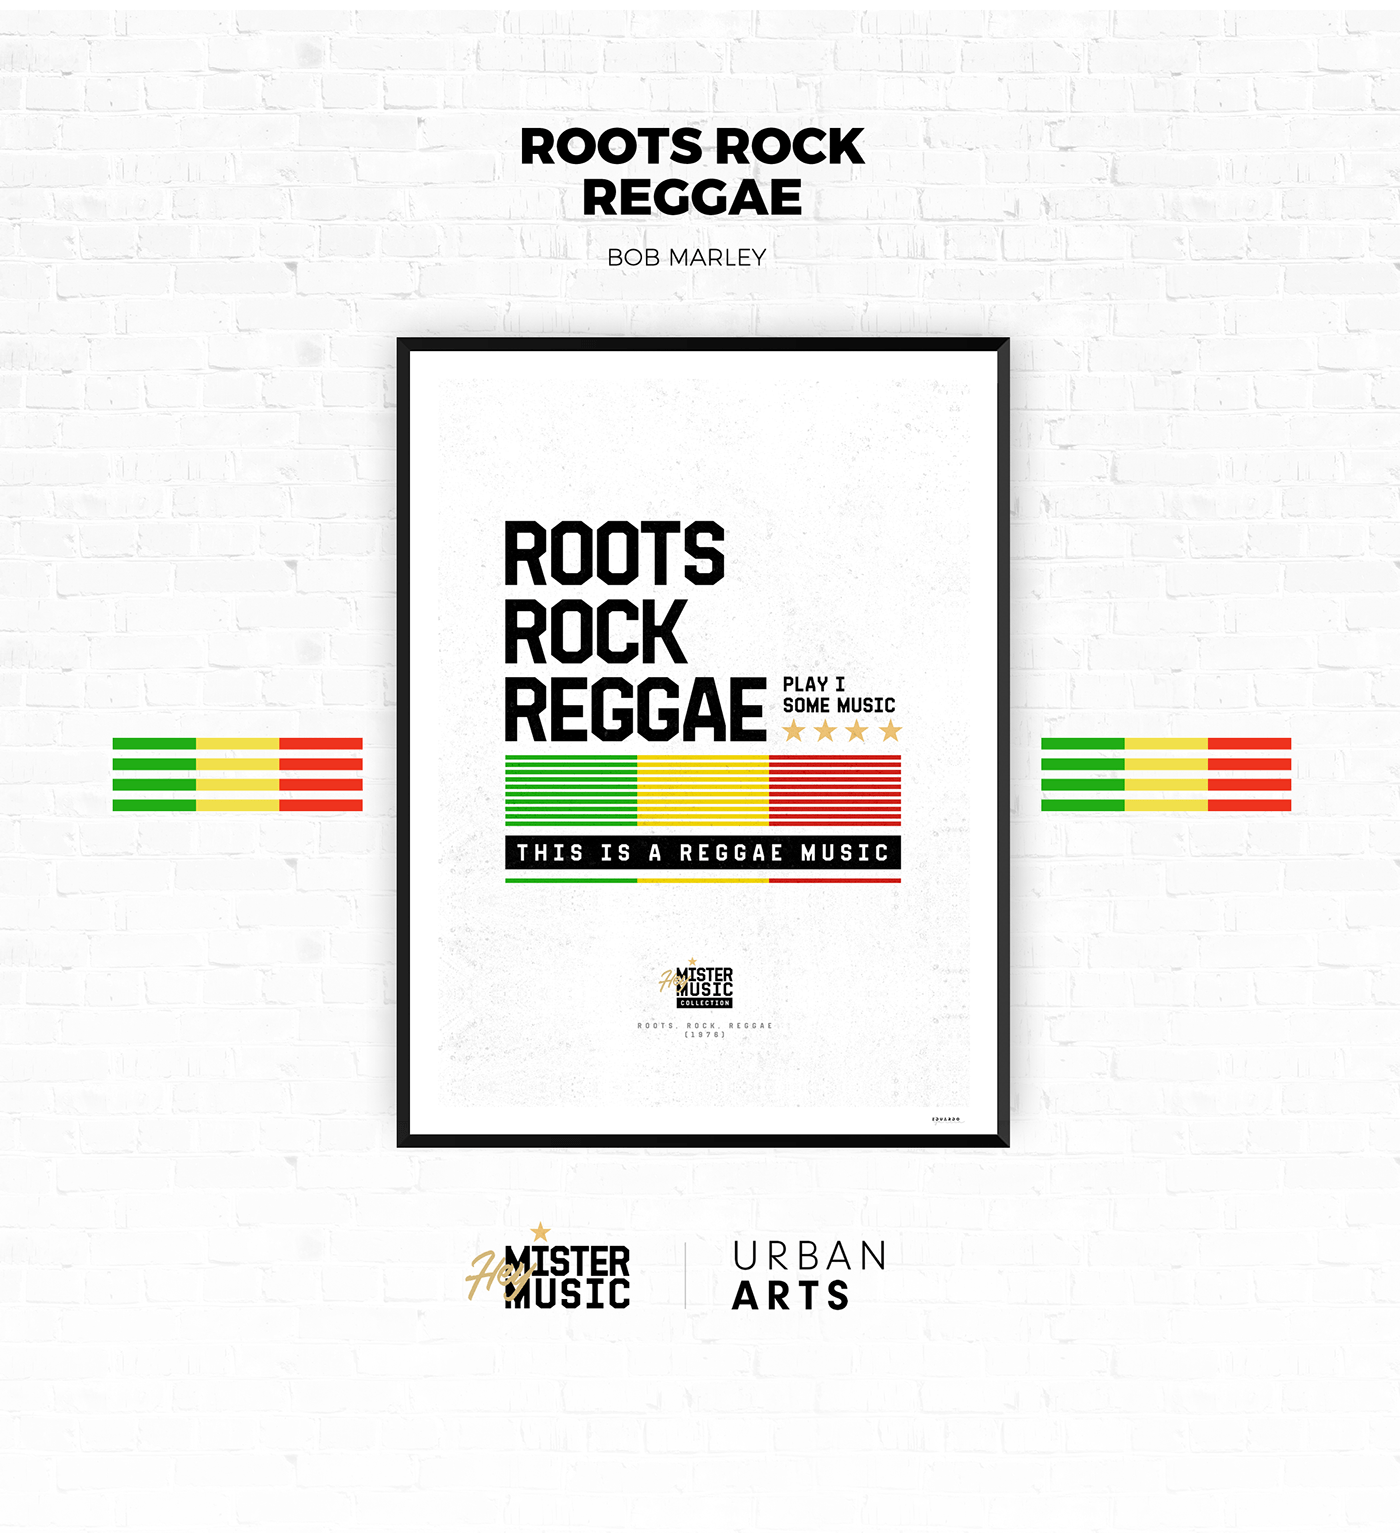 Bob Marley marley music poster reggae reggae music rock roots